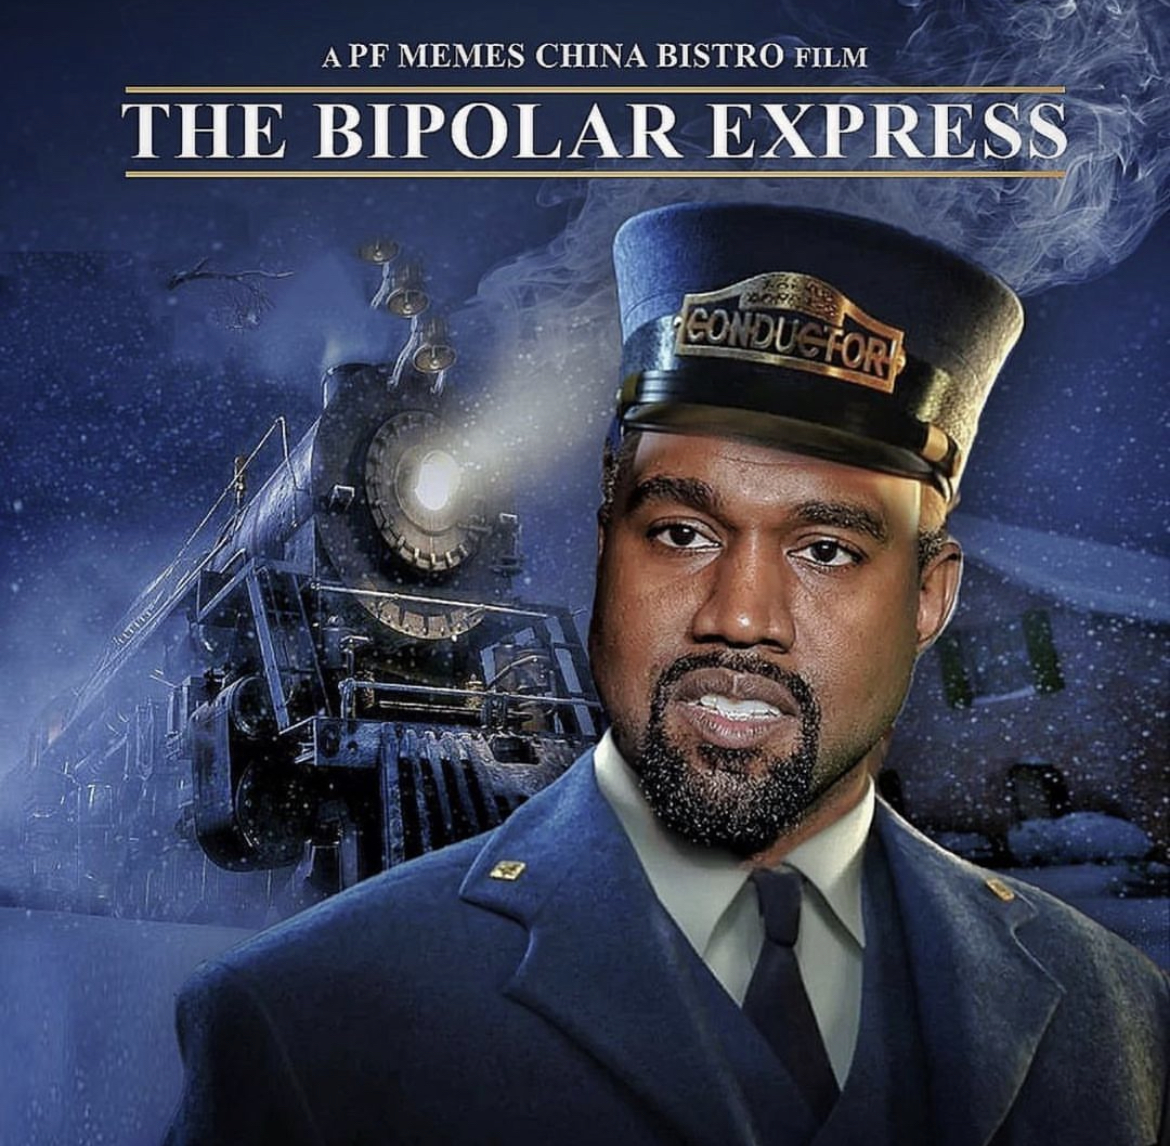 PFMemesChinaBistro Memes - polar express train - Apf Memes China Bistro Film The Bipolar Express Eccle Conductor